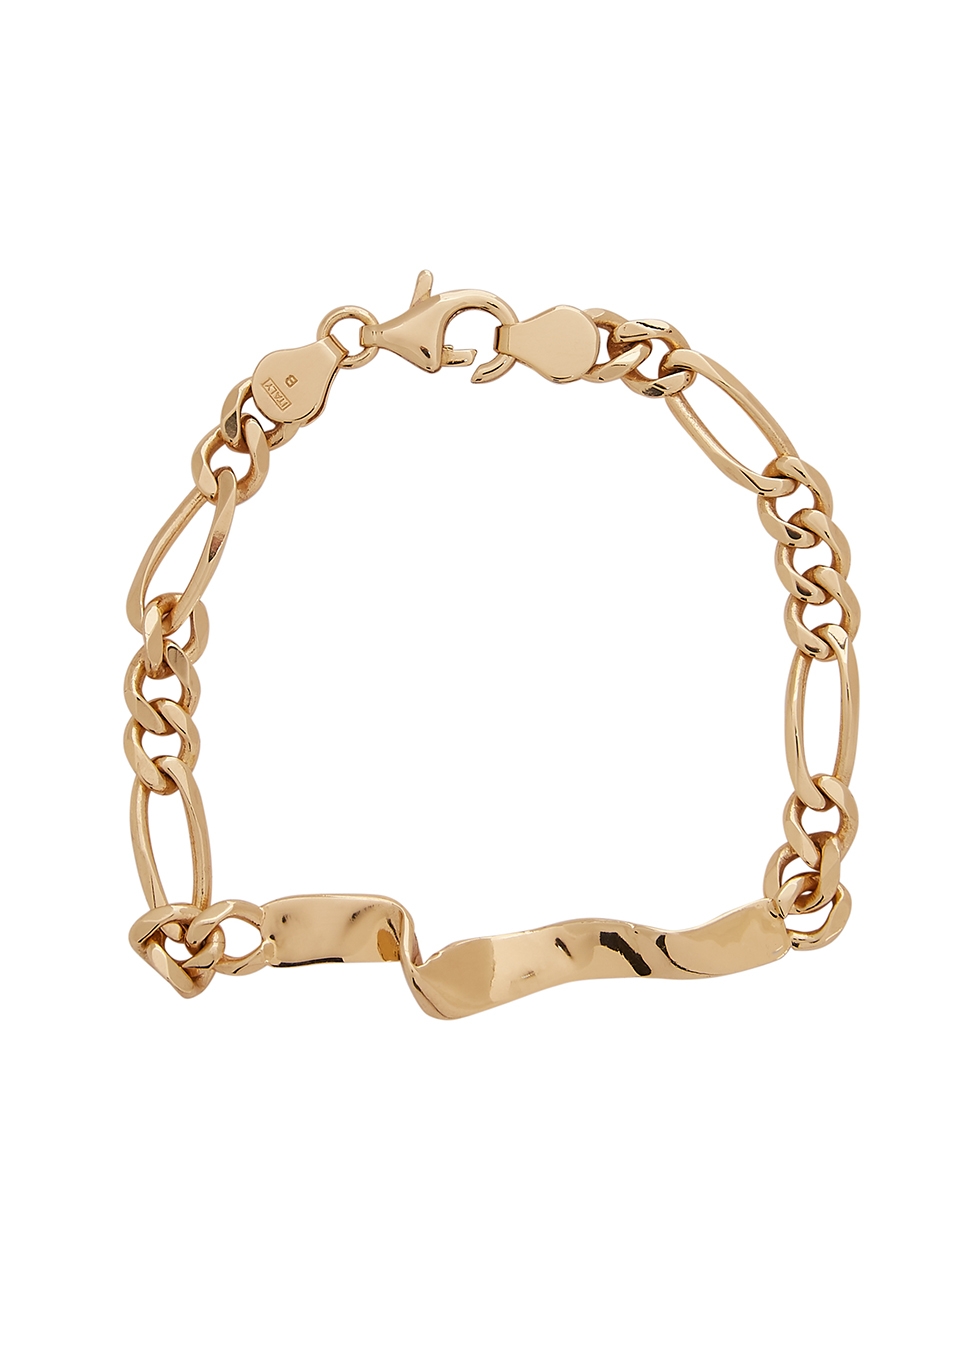 Folded gold-plated chain bracelet